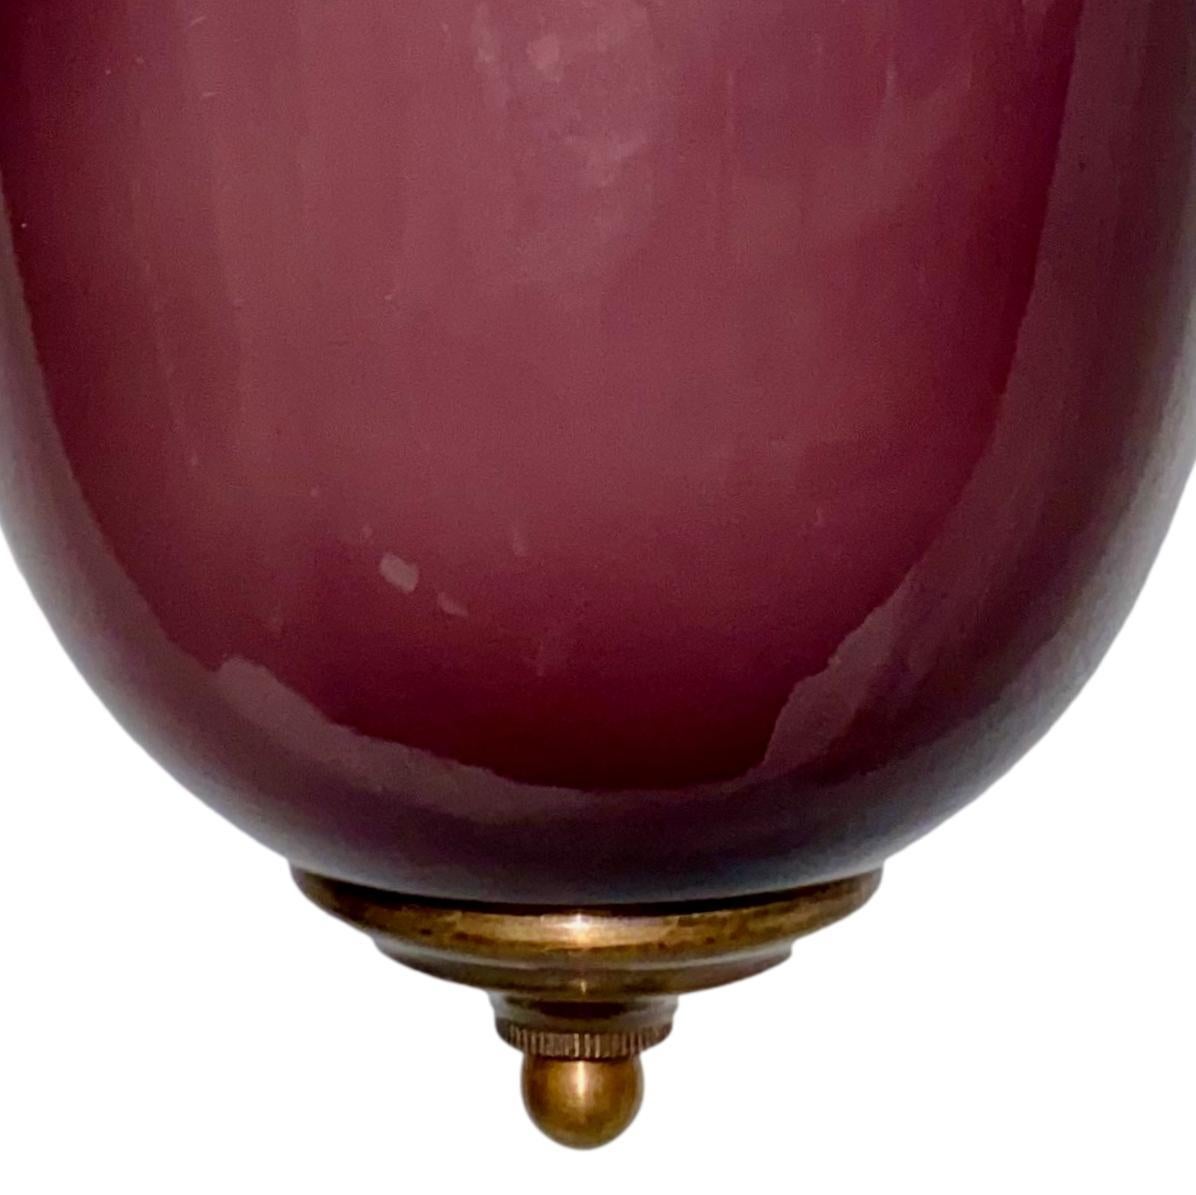 A Italian blown amethyst glass pendant light fixture with two interior lights, circa 1950s.

Measurements:
Diameter: 8.75